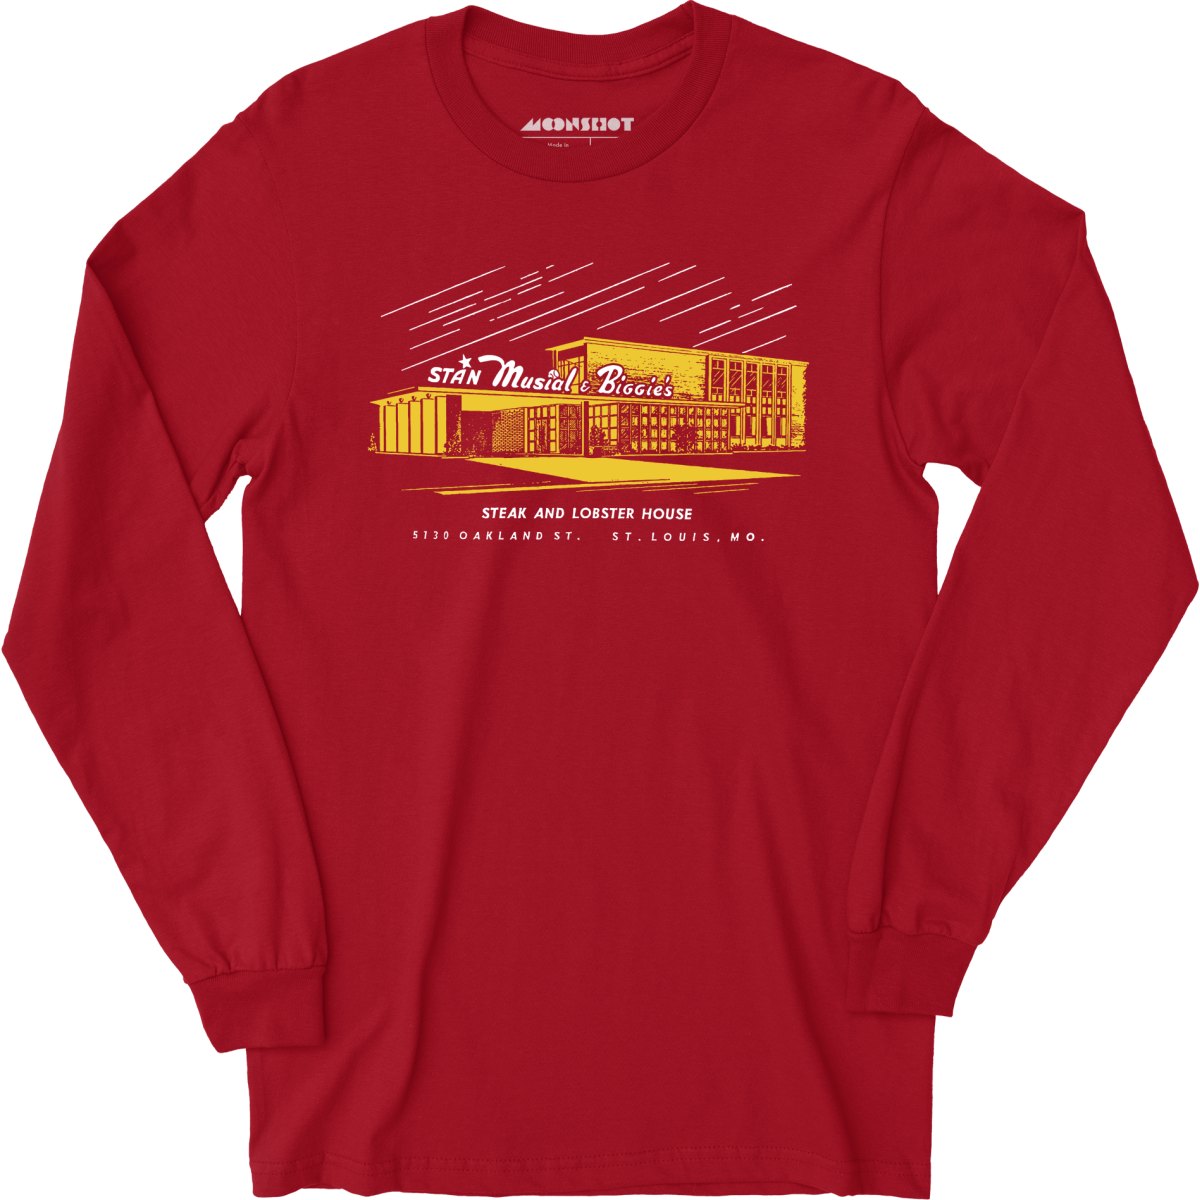 Stan Musial & Biggie's - St. Louis, MO - Vintage Restaurant - Long Sleeve T-Shirt